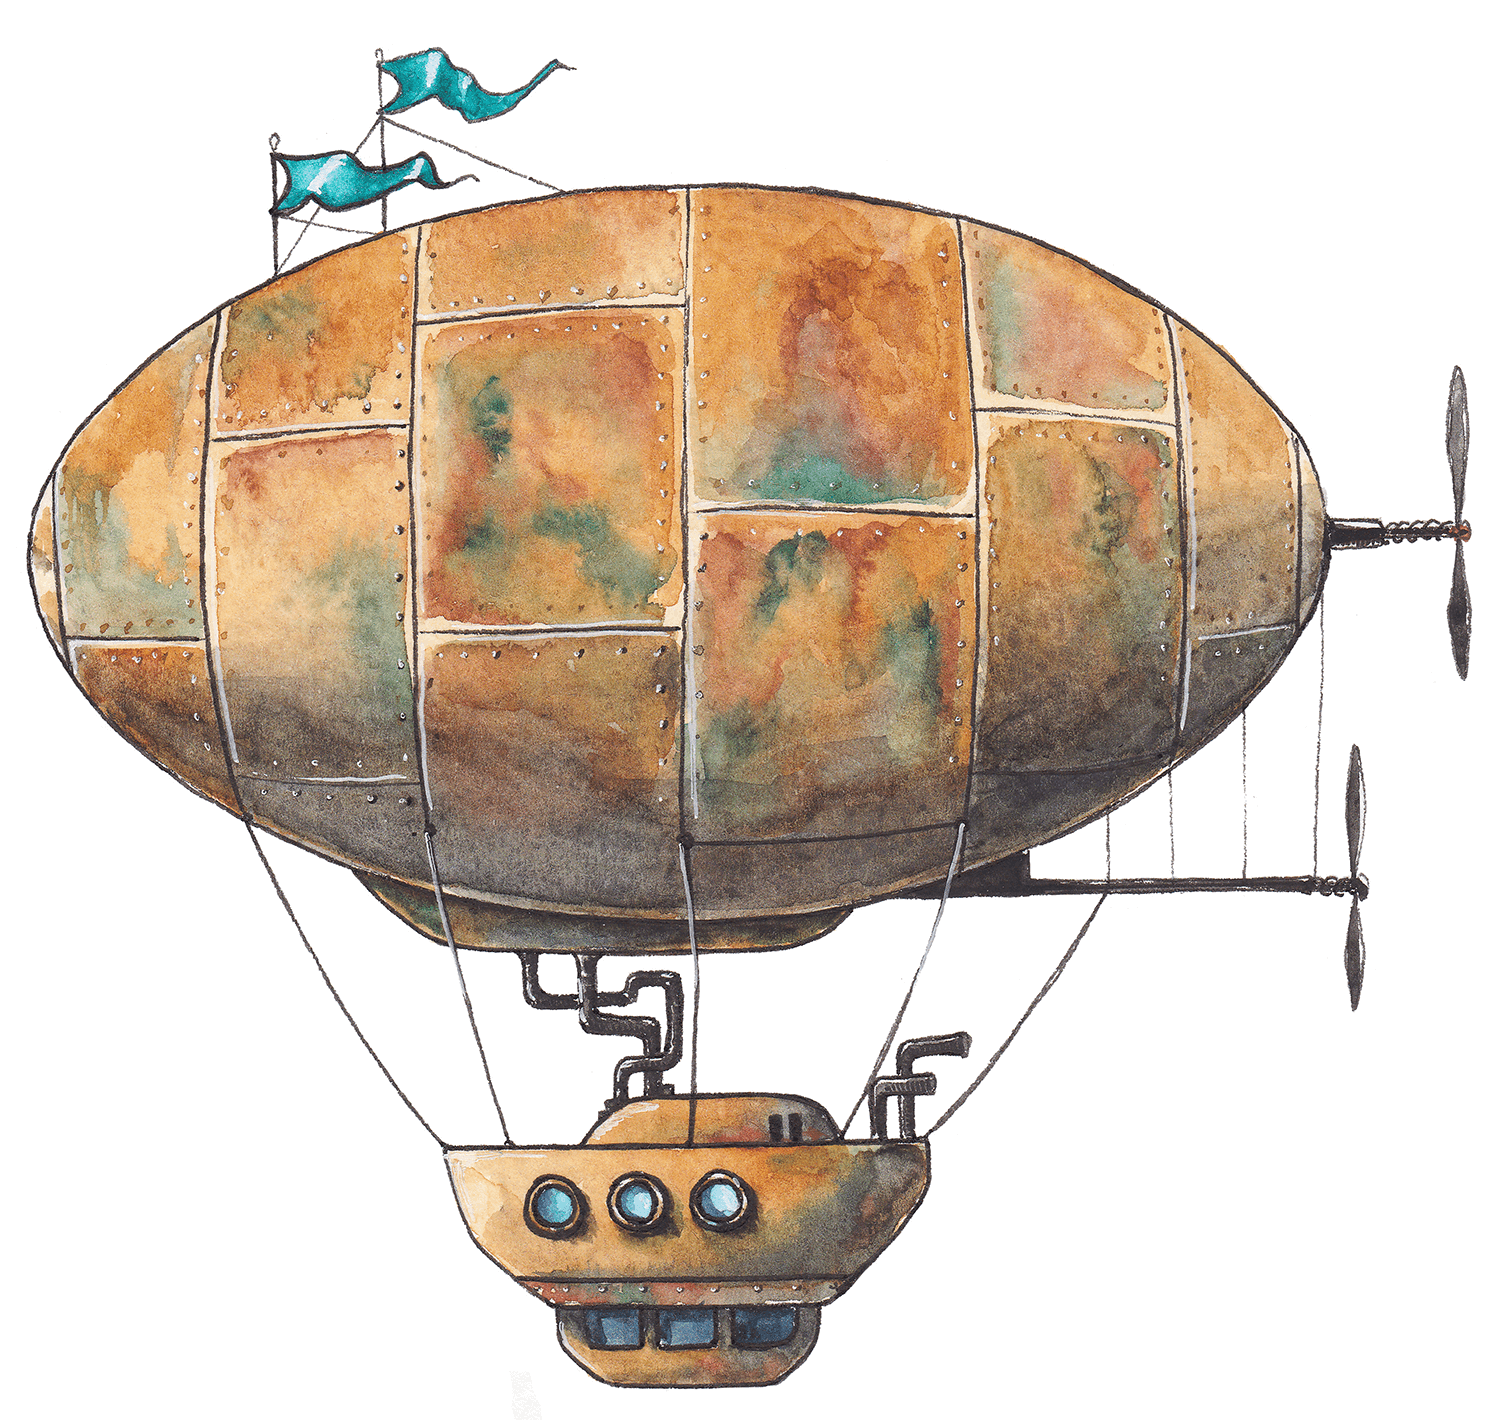 A steampunk airship sails jauntily